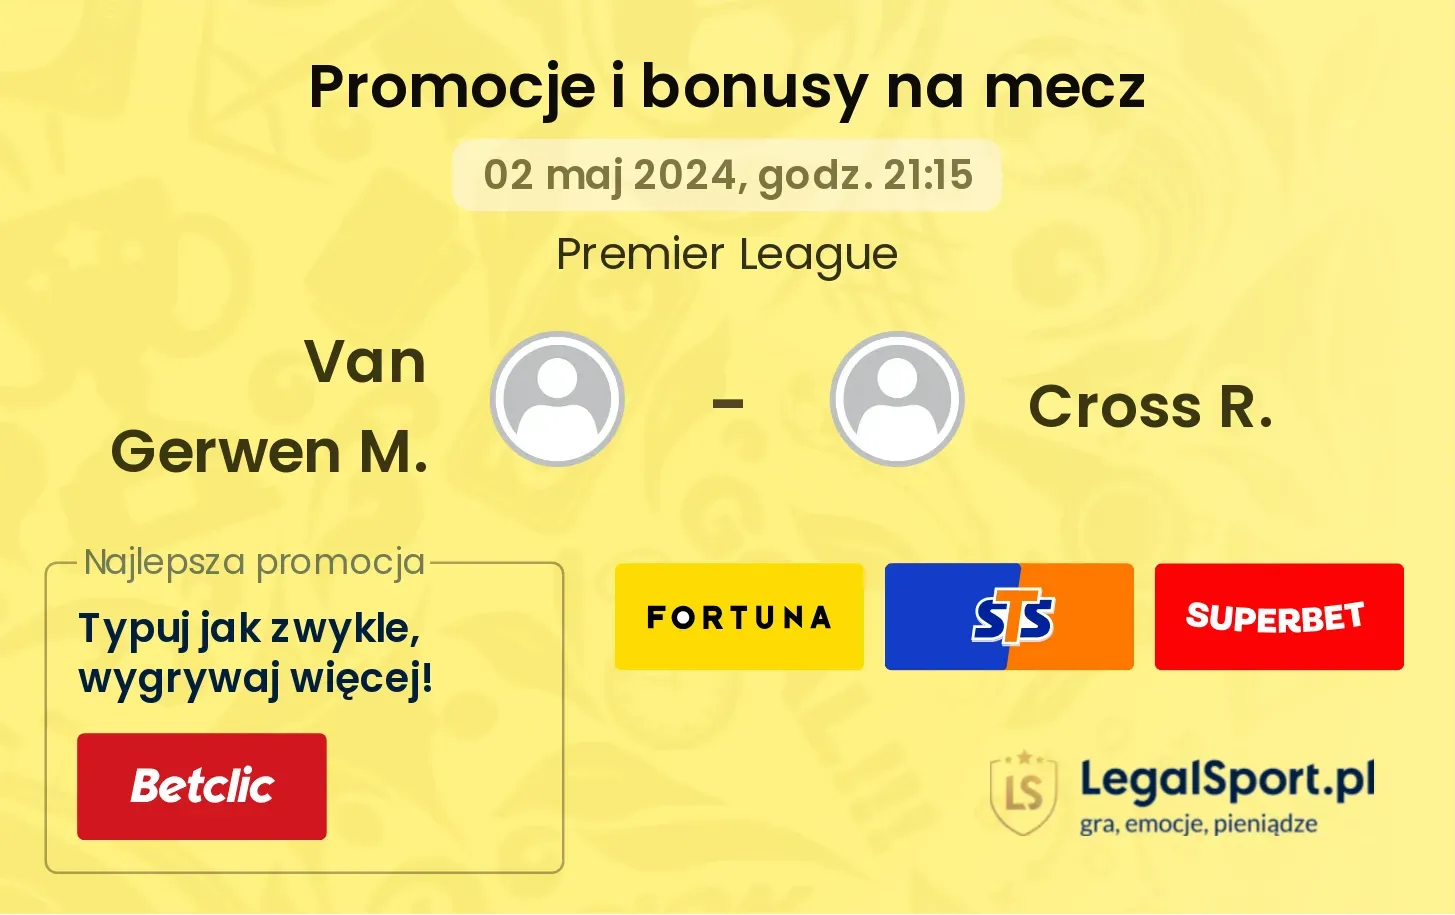 Van Gerwen M. - Cross R. promocje bonusy na mecz